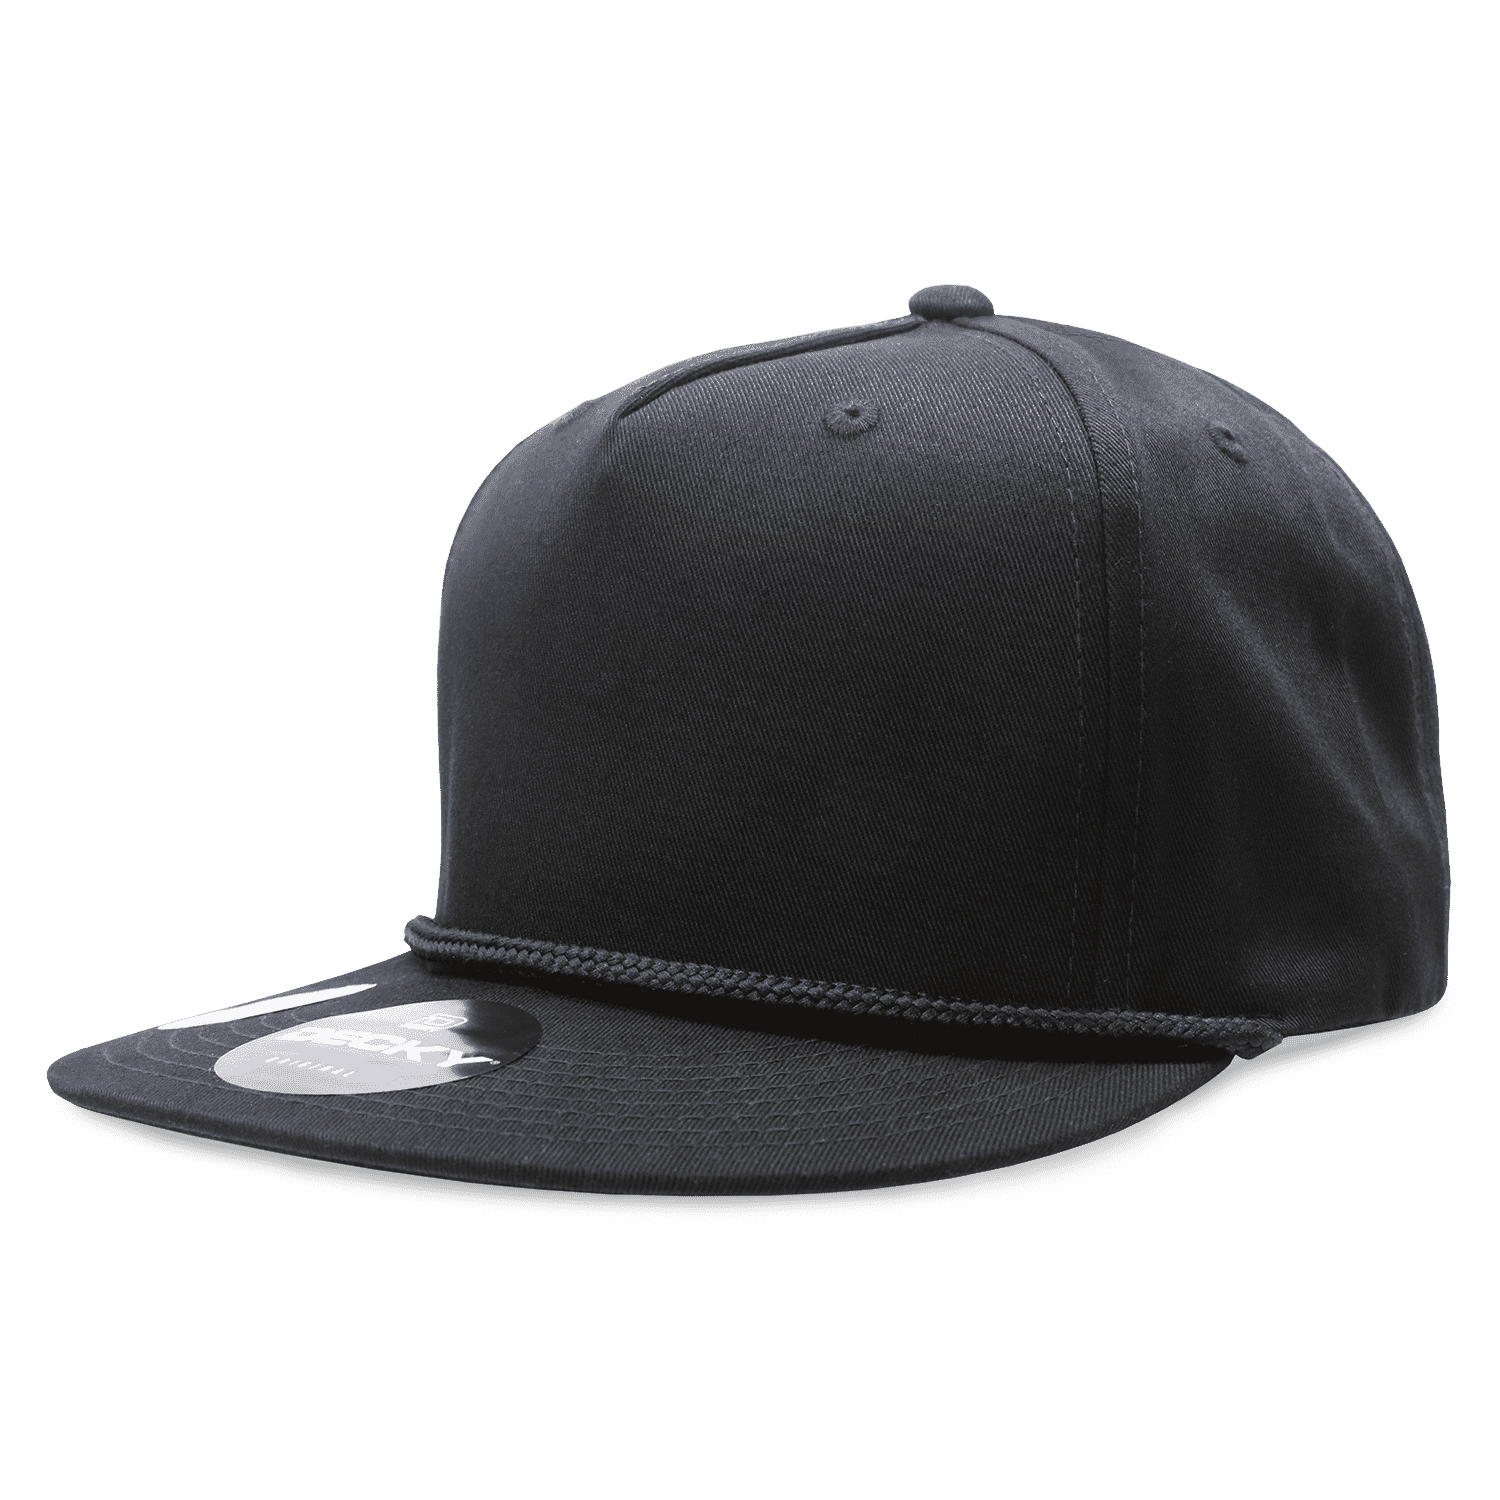 Decky 1041 Classic Flat Bill Golf Cap - Black - HIT A Double